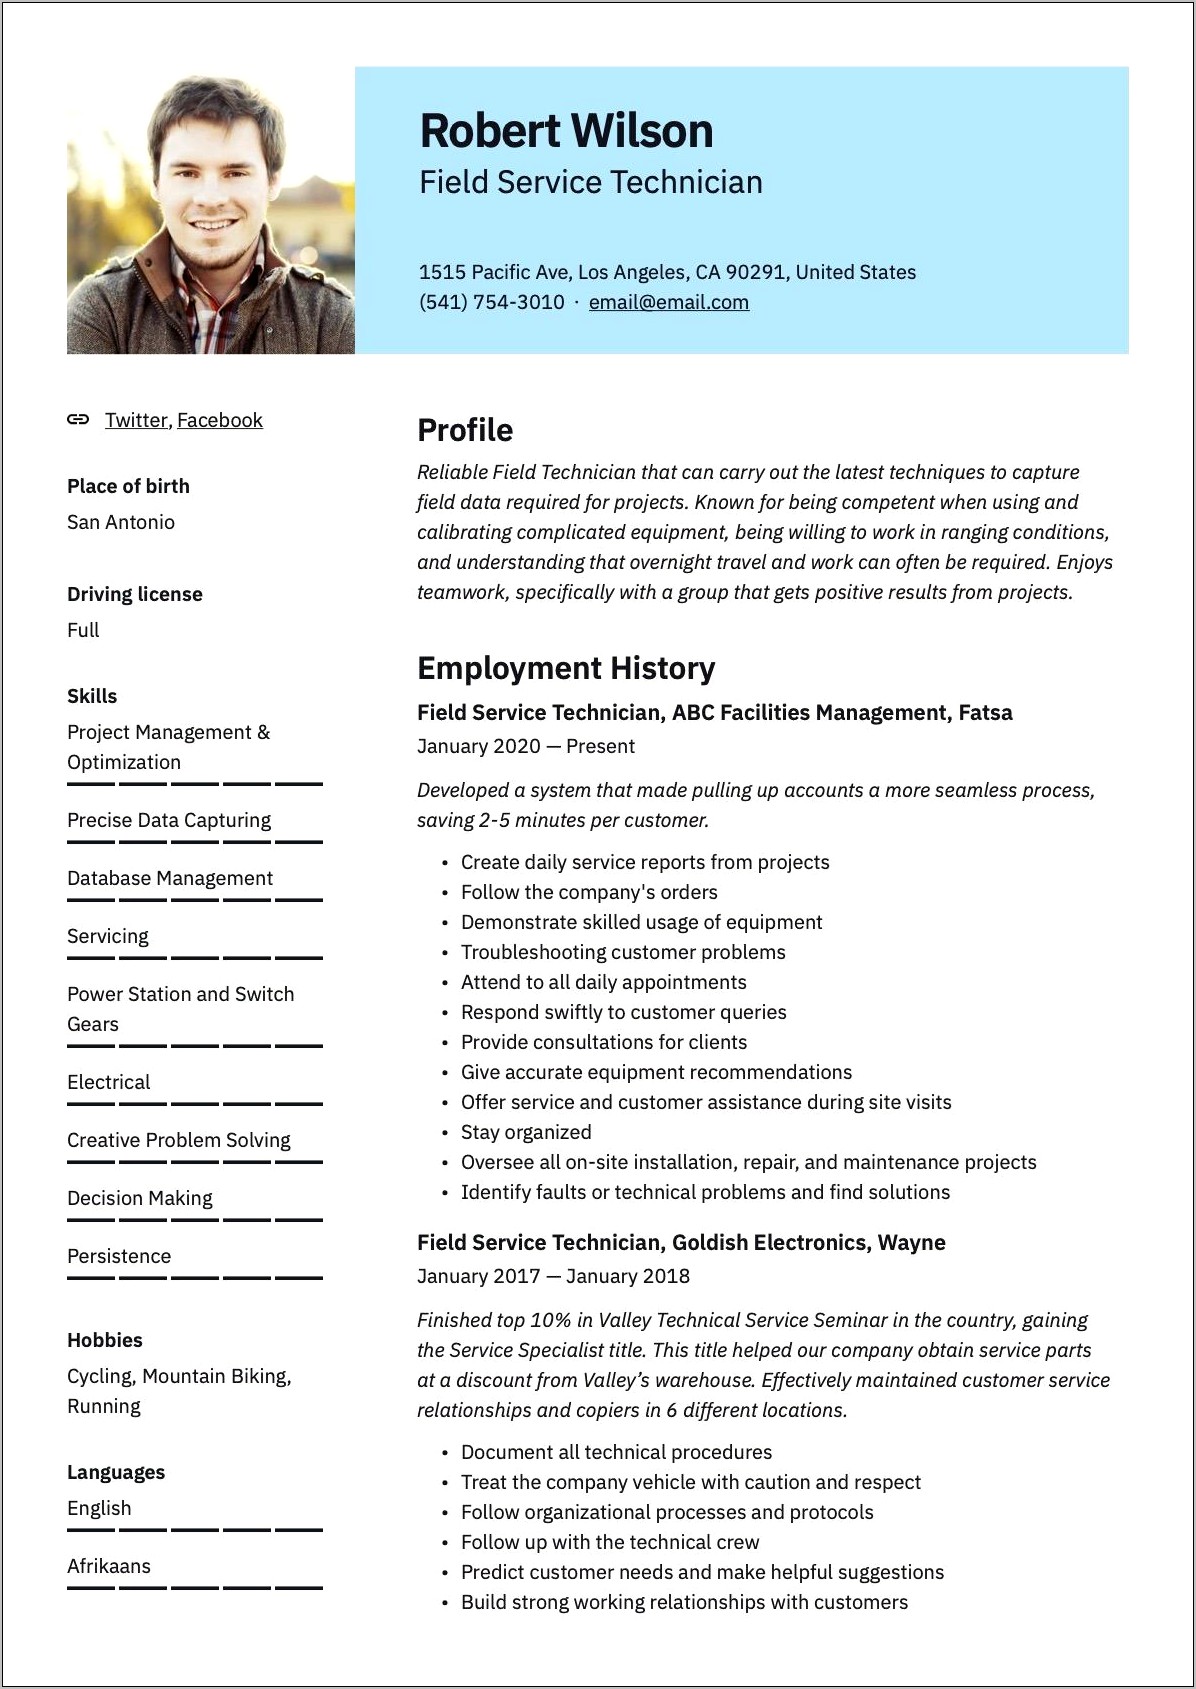 Field Service Technician Job Description For Resume